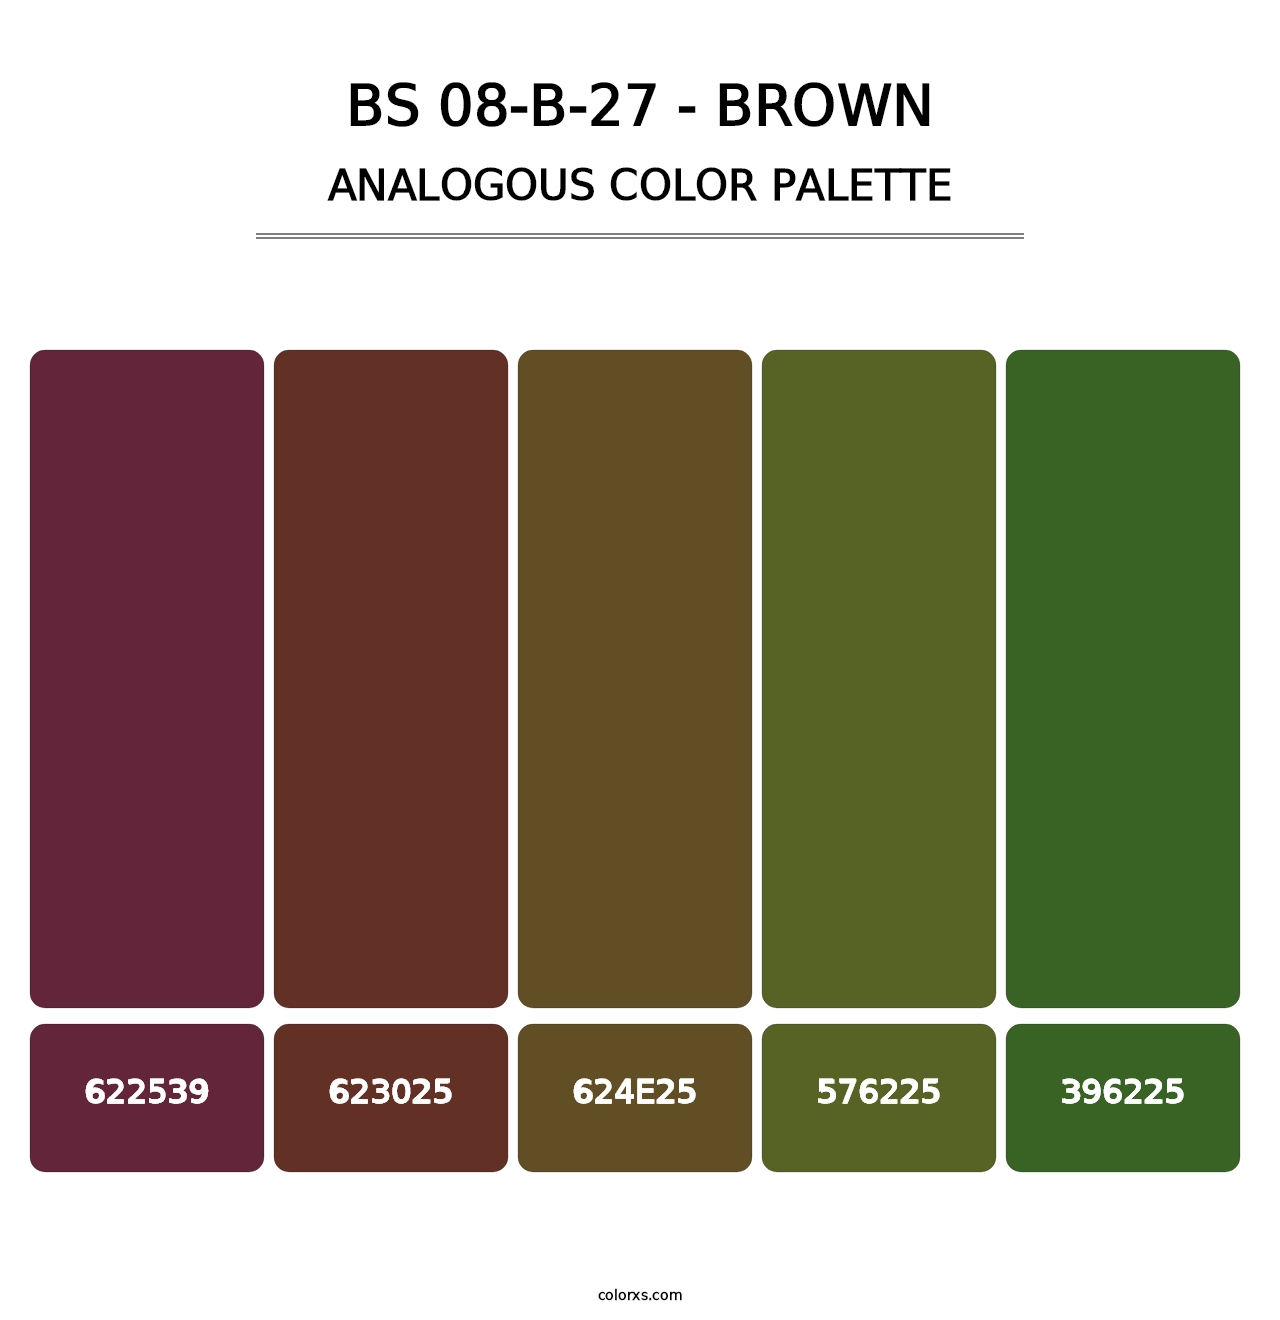 BS 08-B-27 - Brown - Analogous Color Palette